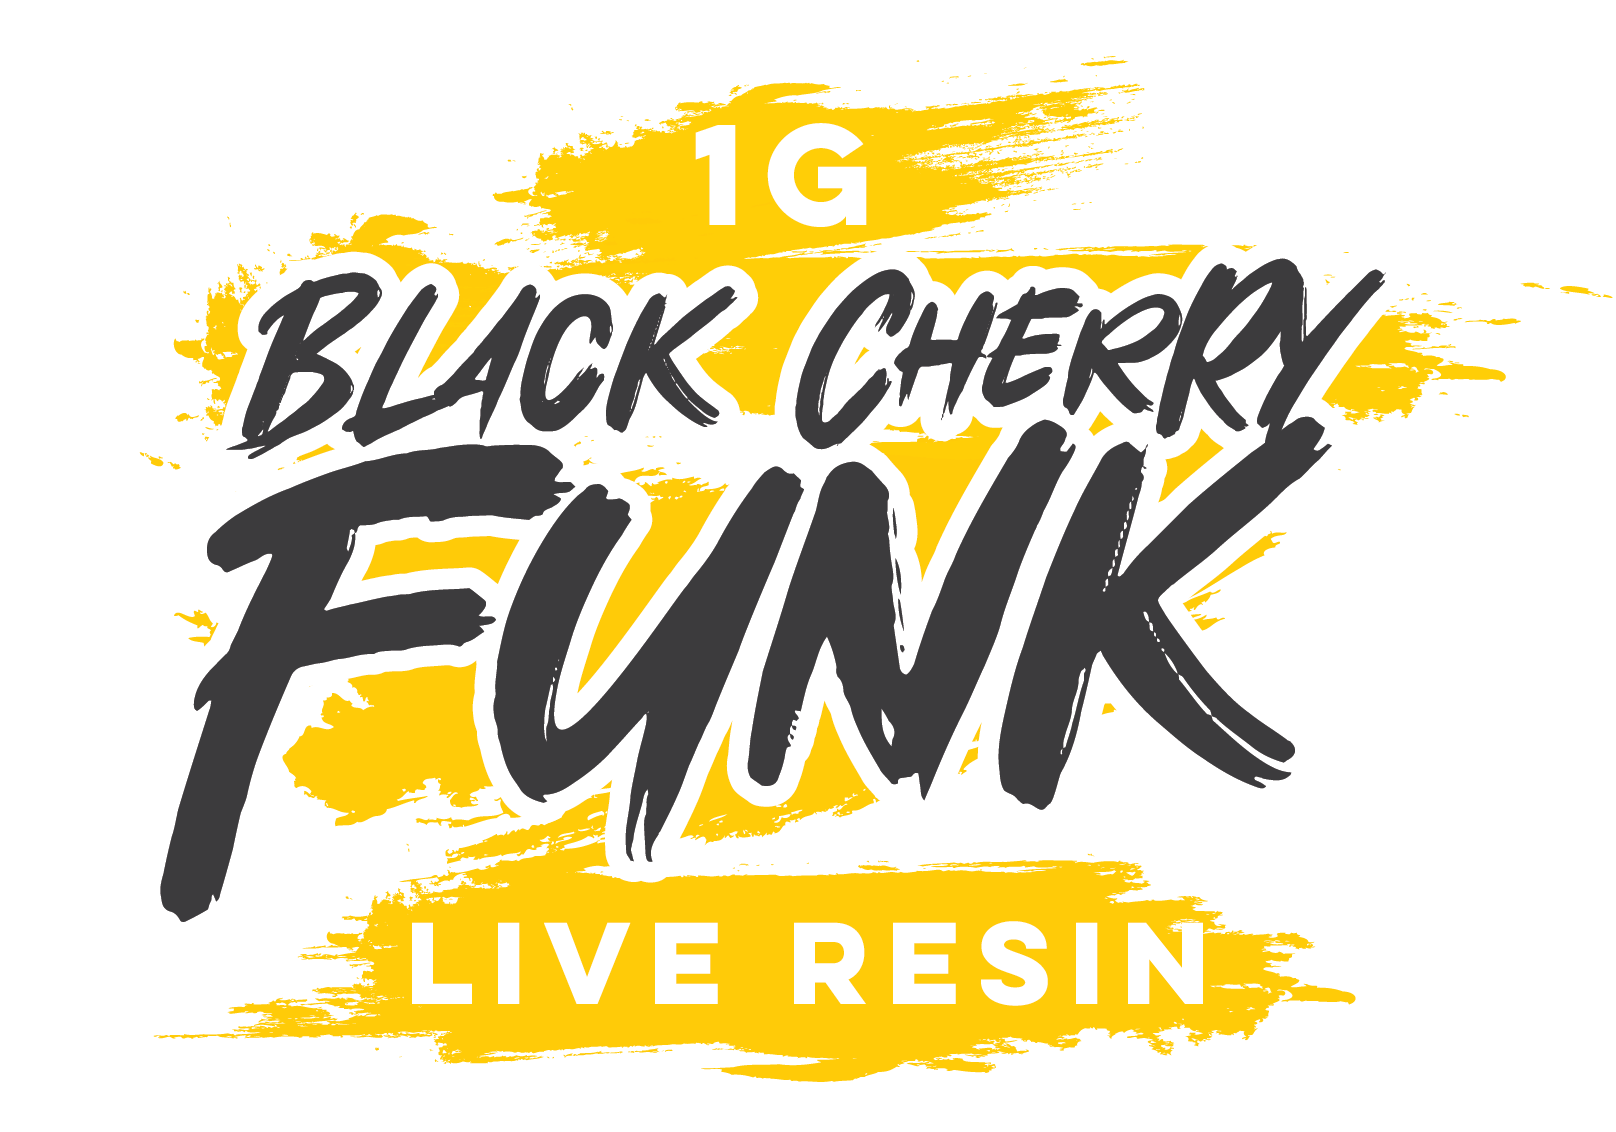 GREAZY Black cherry Funk Live Resin